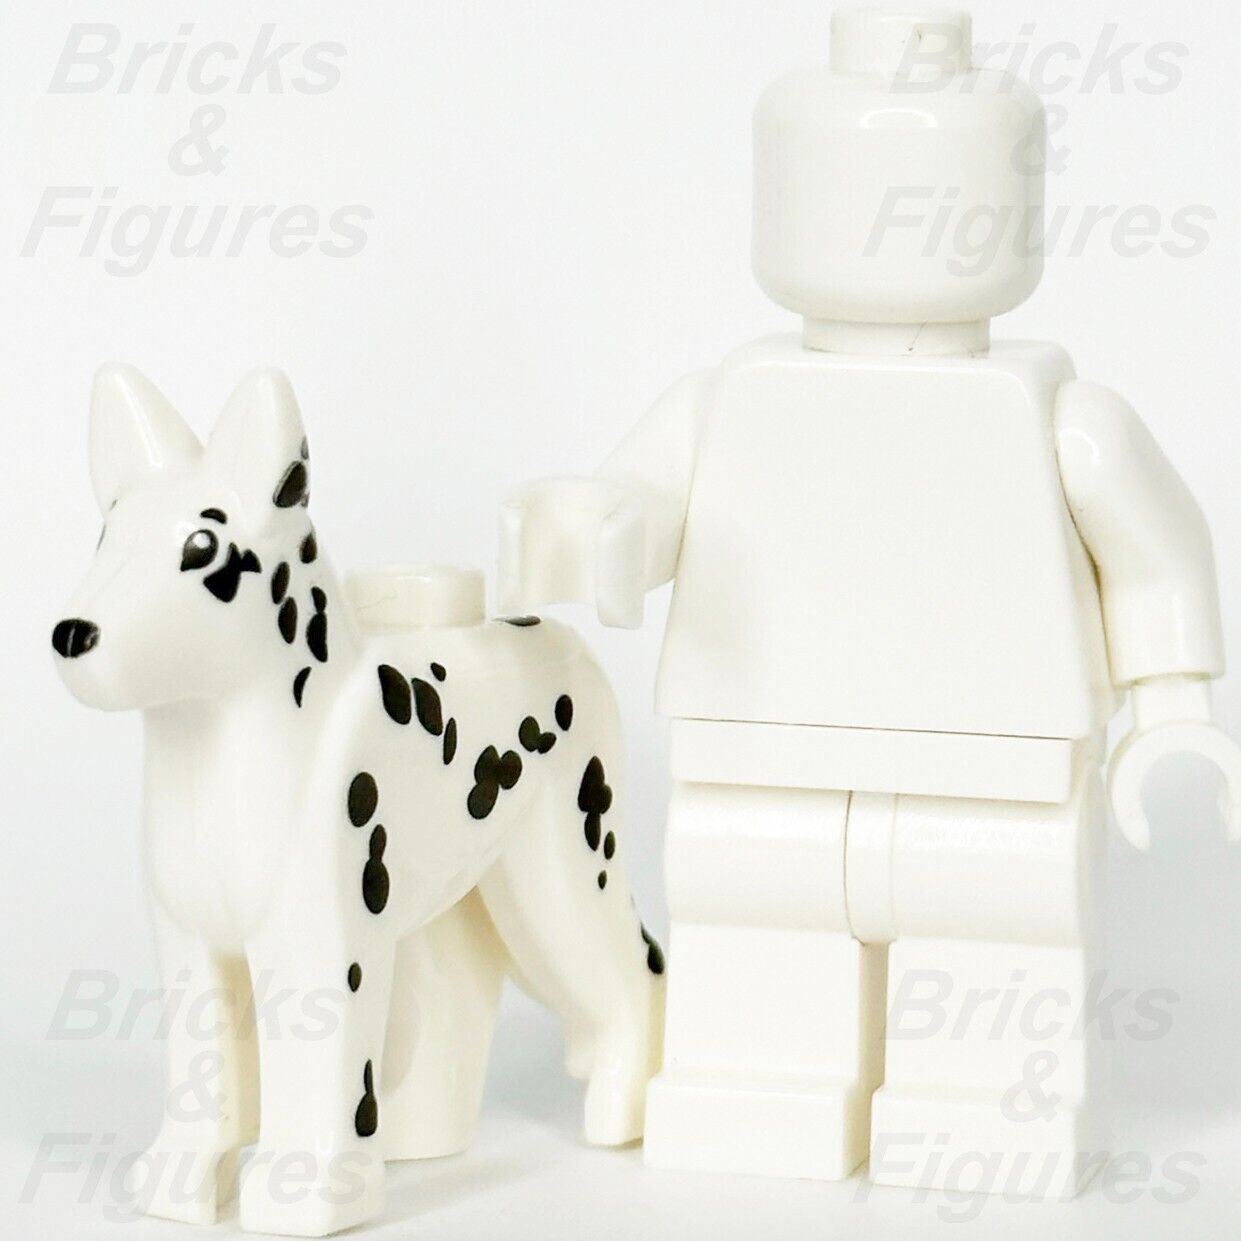 LEGO City Dalmatian Dog Minifigure Part Animal Fire 92586pb03 White Black Spots